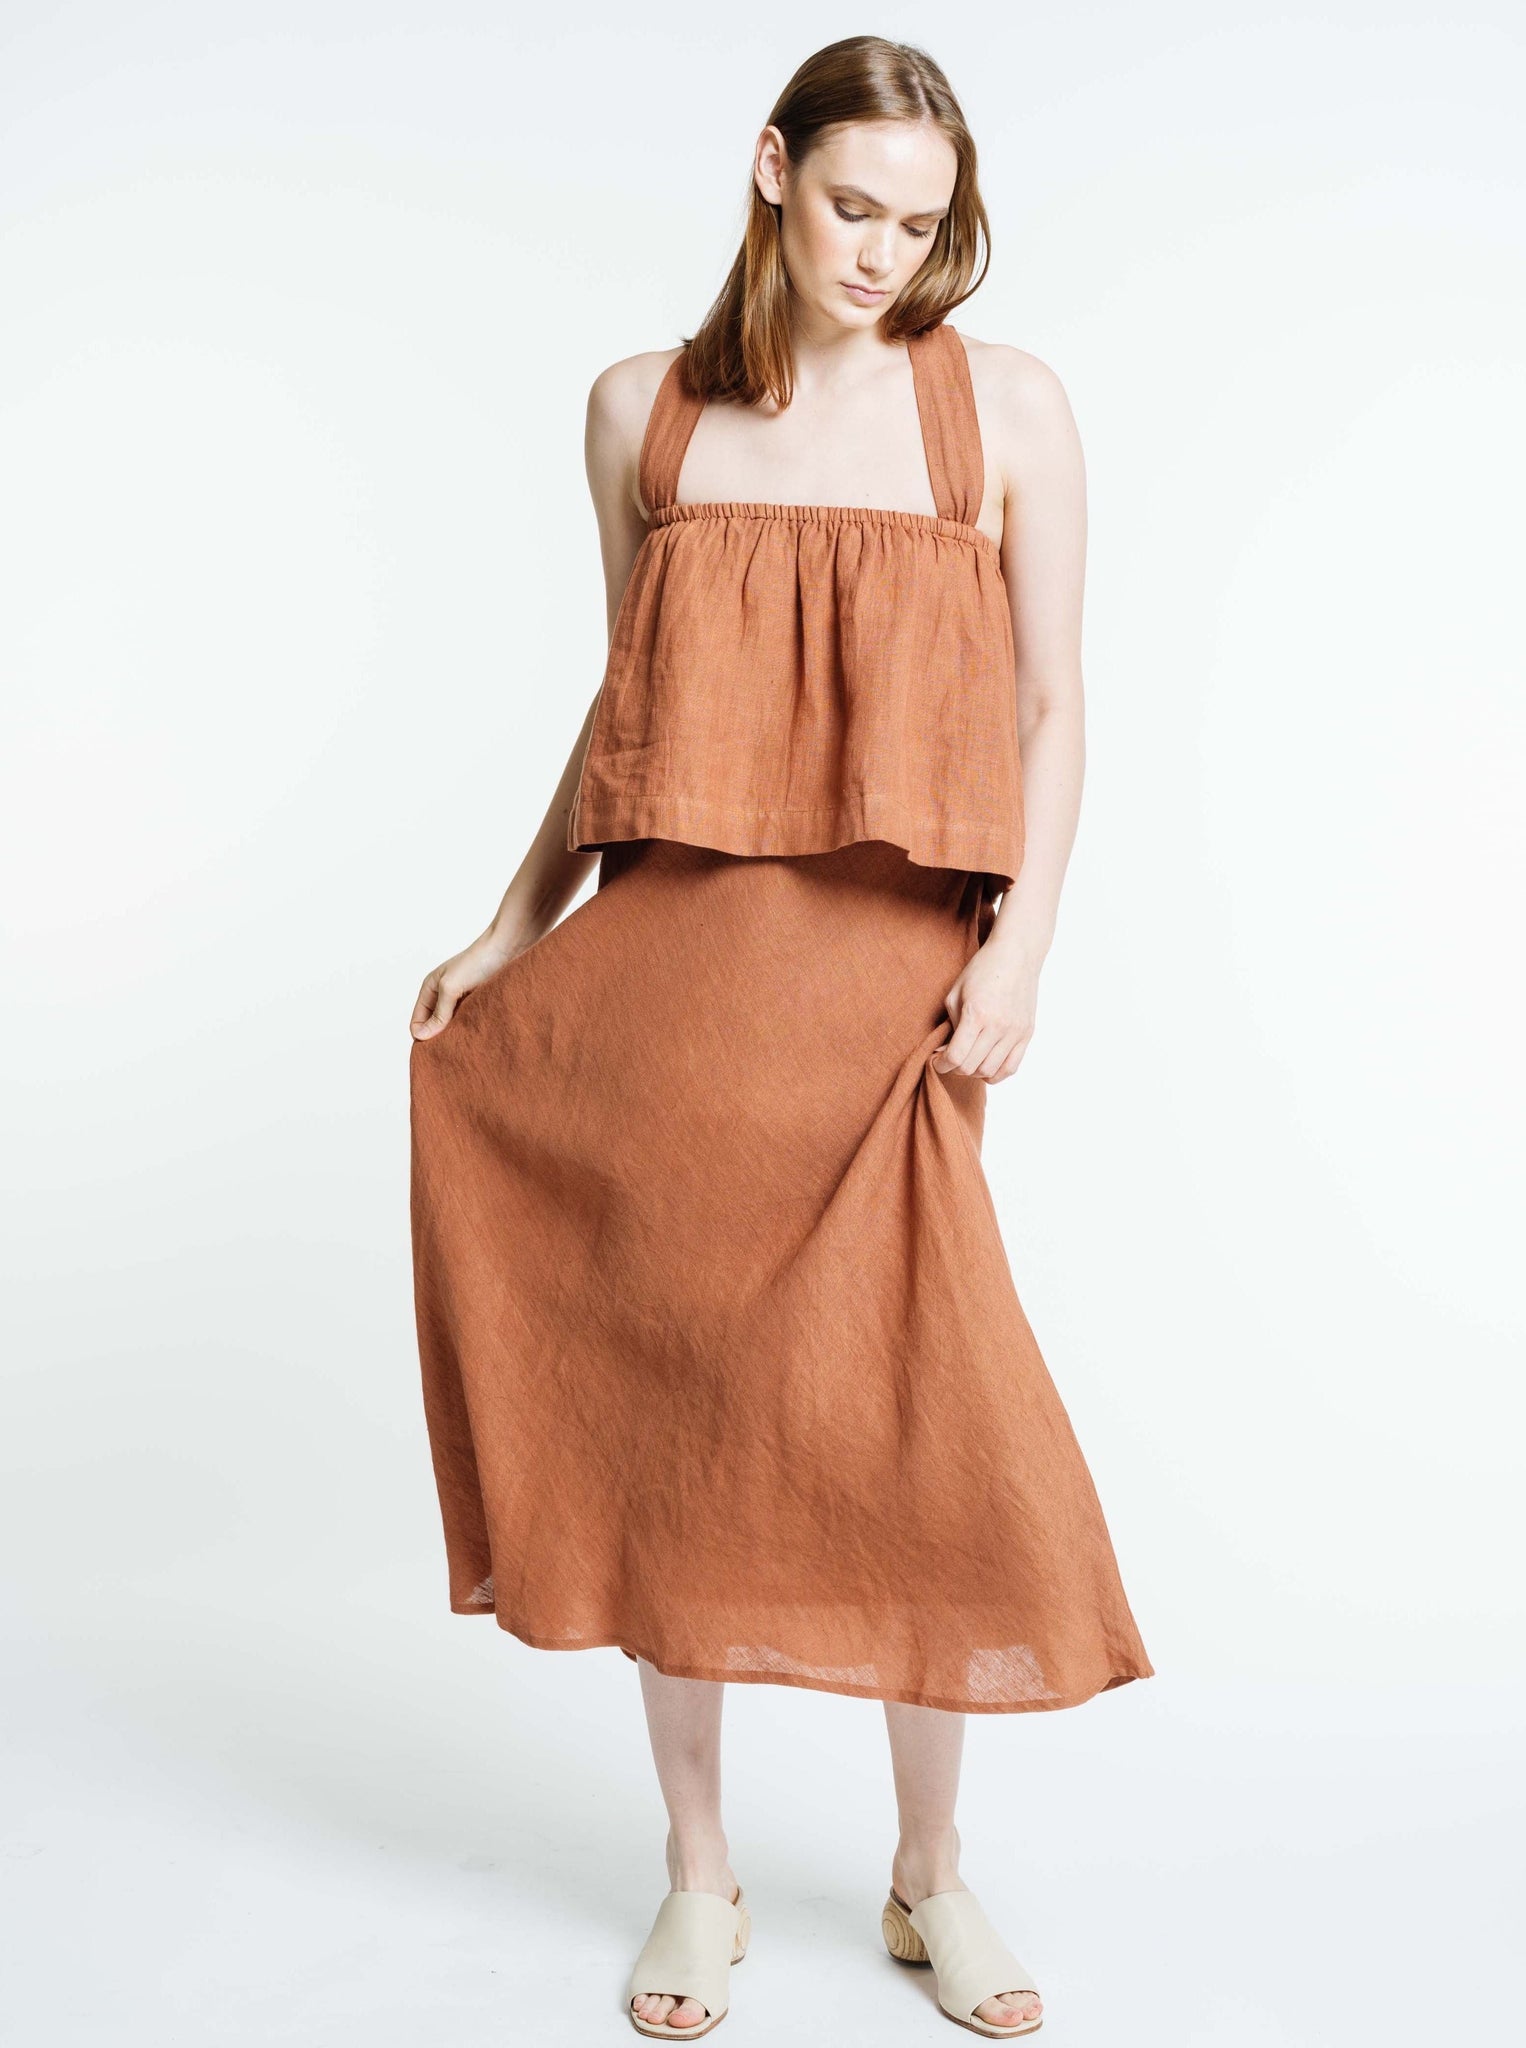 The model is wearing a Jardín Midi Skirt in Amber Brown.